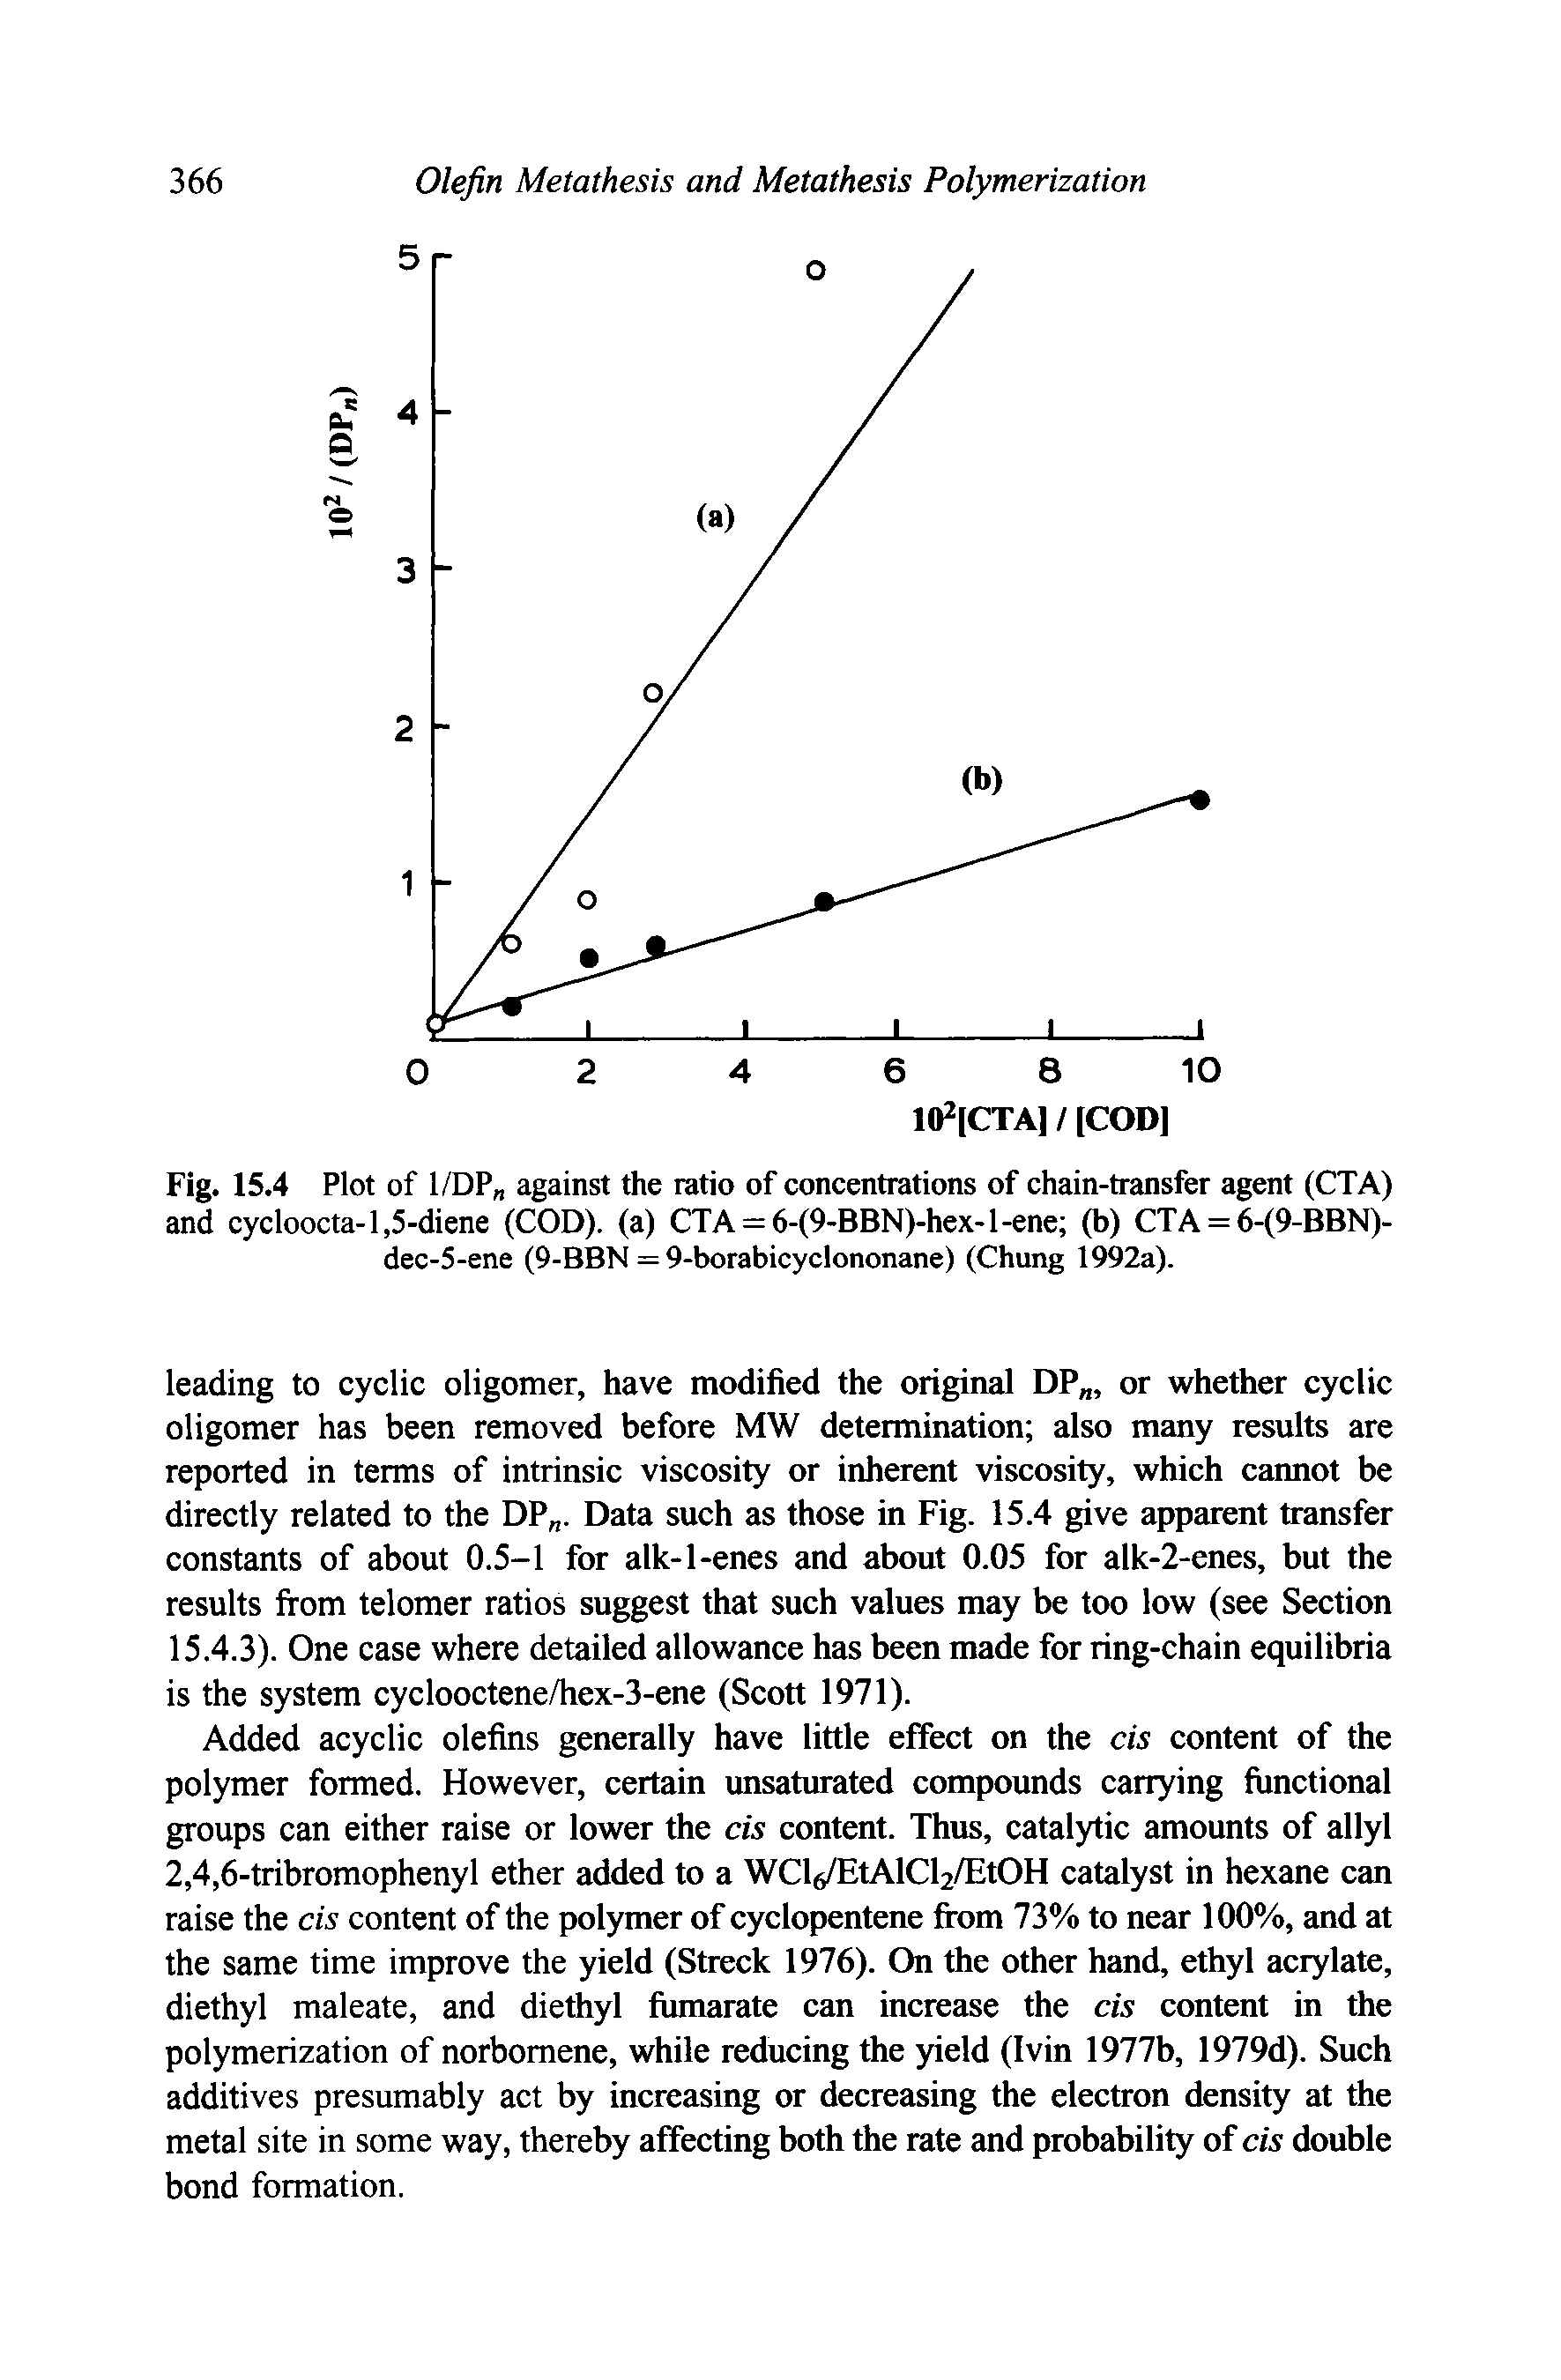 Fig. 15.4 Plot of 1/DP against the ratio of concentrations of chain-transfer agent (CTA) and cycloocta-1,5-diene (COD), (a) CTA = 6-(9-BBN)-hex-l-ene (b) CTA = 6-(9-BBN)-dec-5-ene (9-BBN = 9-borabicyclononane) (Chung 1992a).